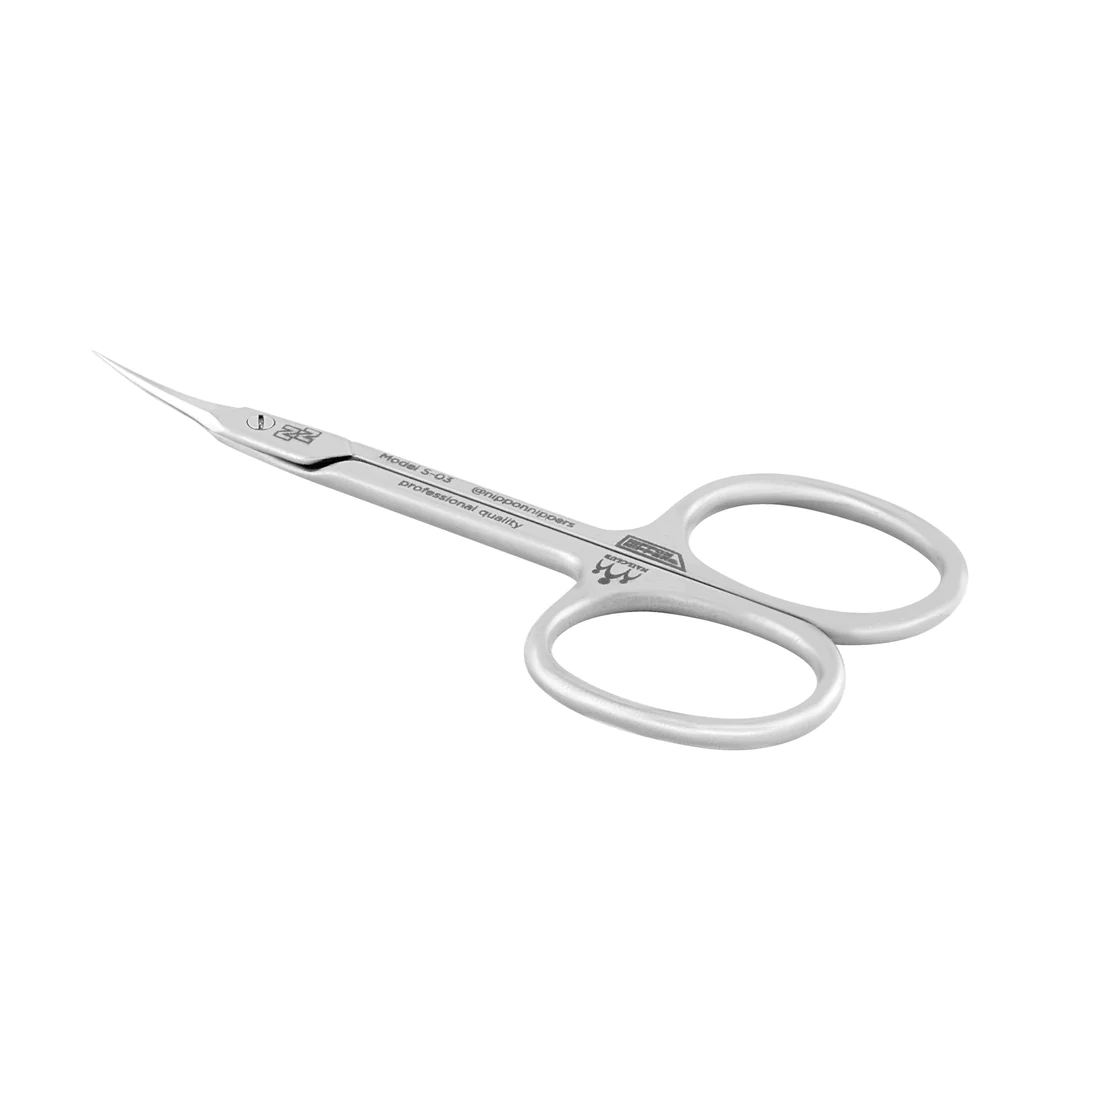 NIPPON NIPPERS Cuticle scissors S-03